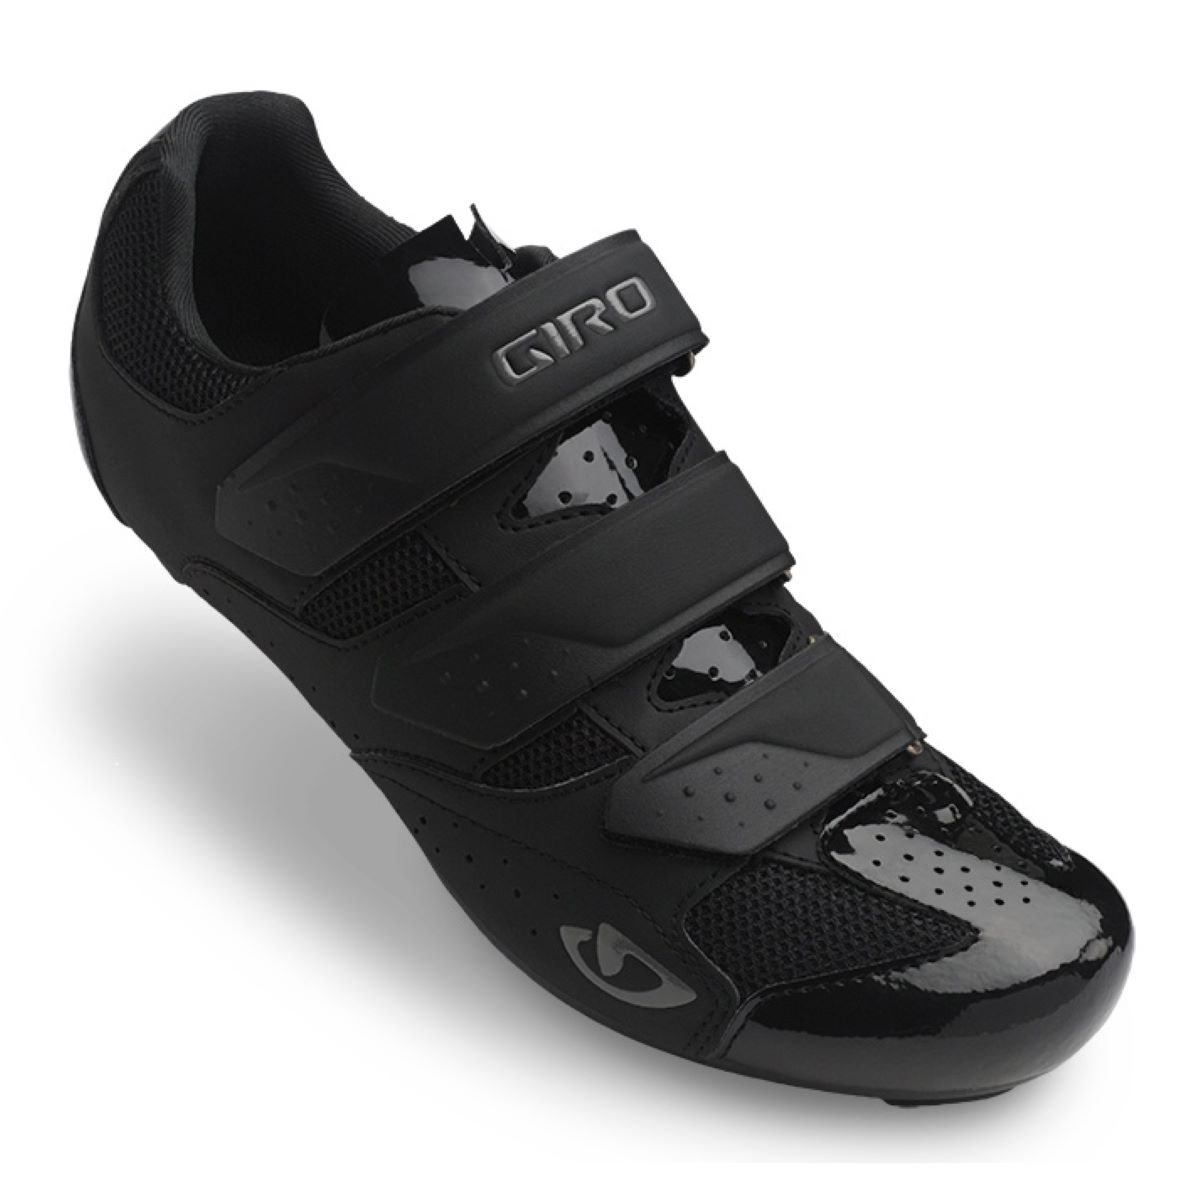 Zapatillas de carretera Giro Techne - Zapatillas de ciclismo